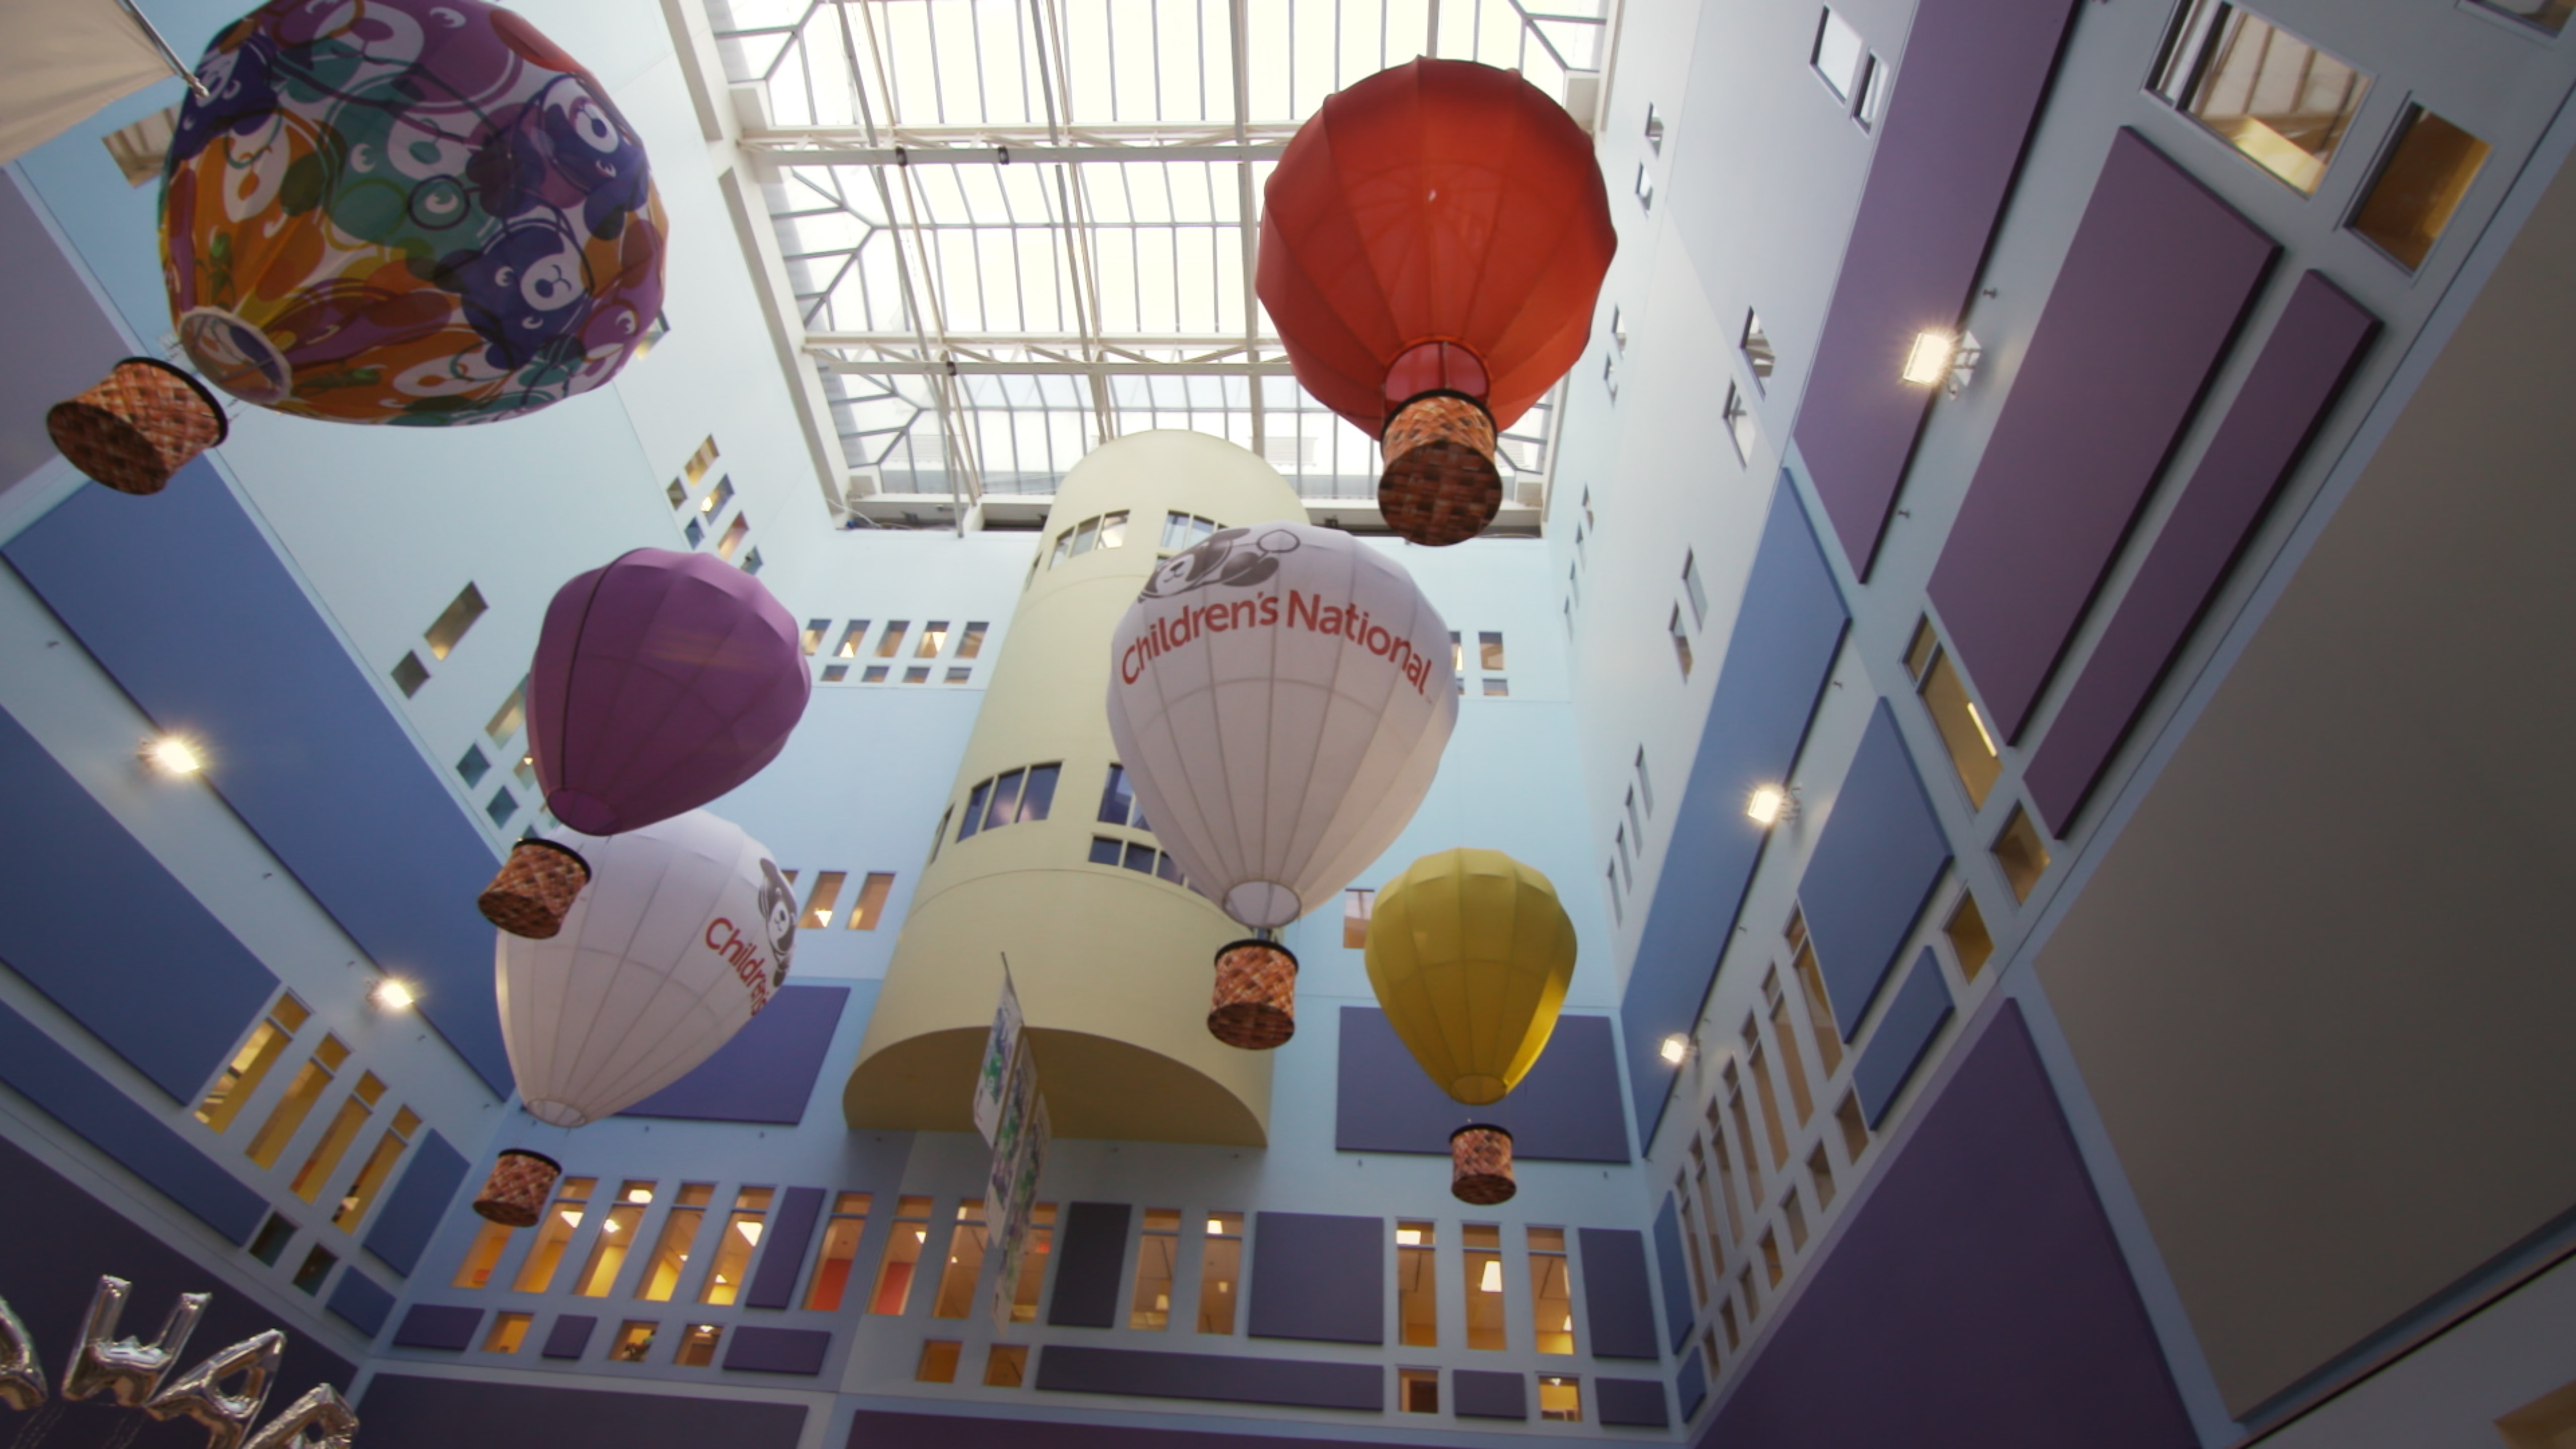 Atrium of Childrens National Hospital looking upward at skylight and miniature hot air balloon models